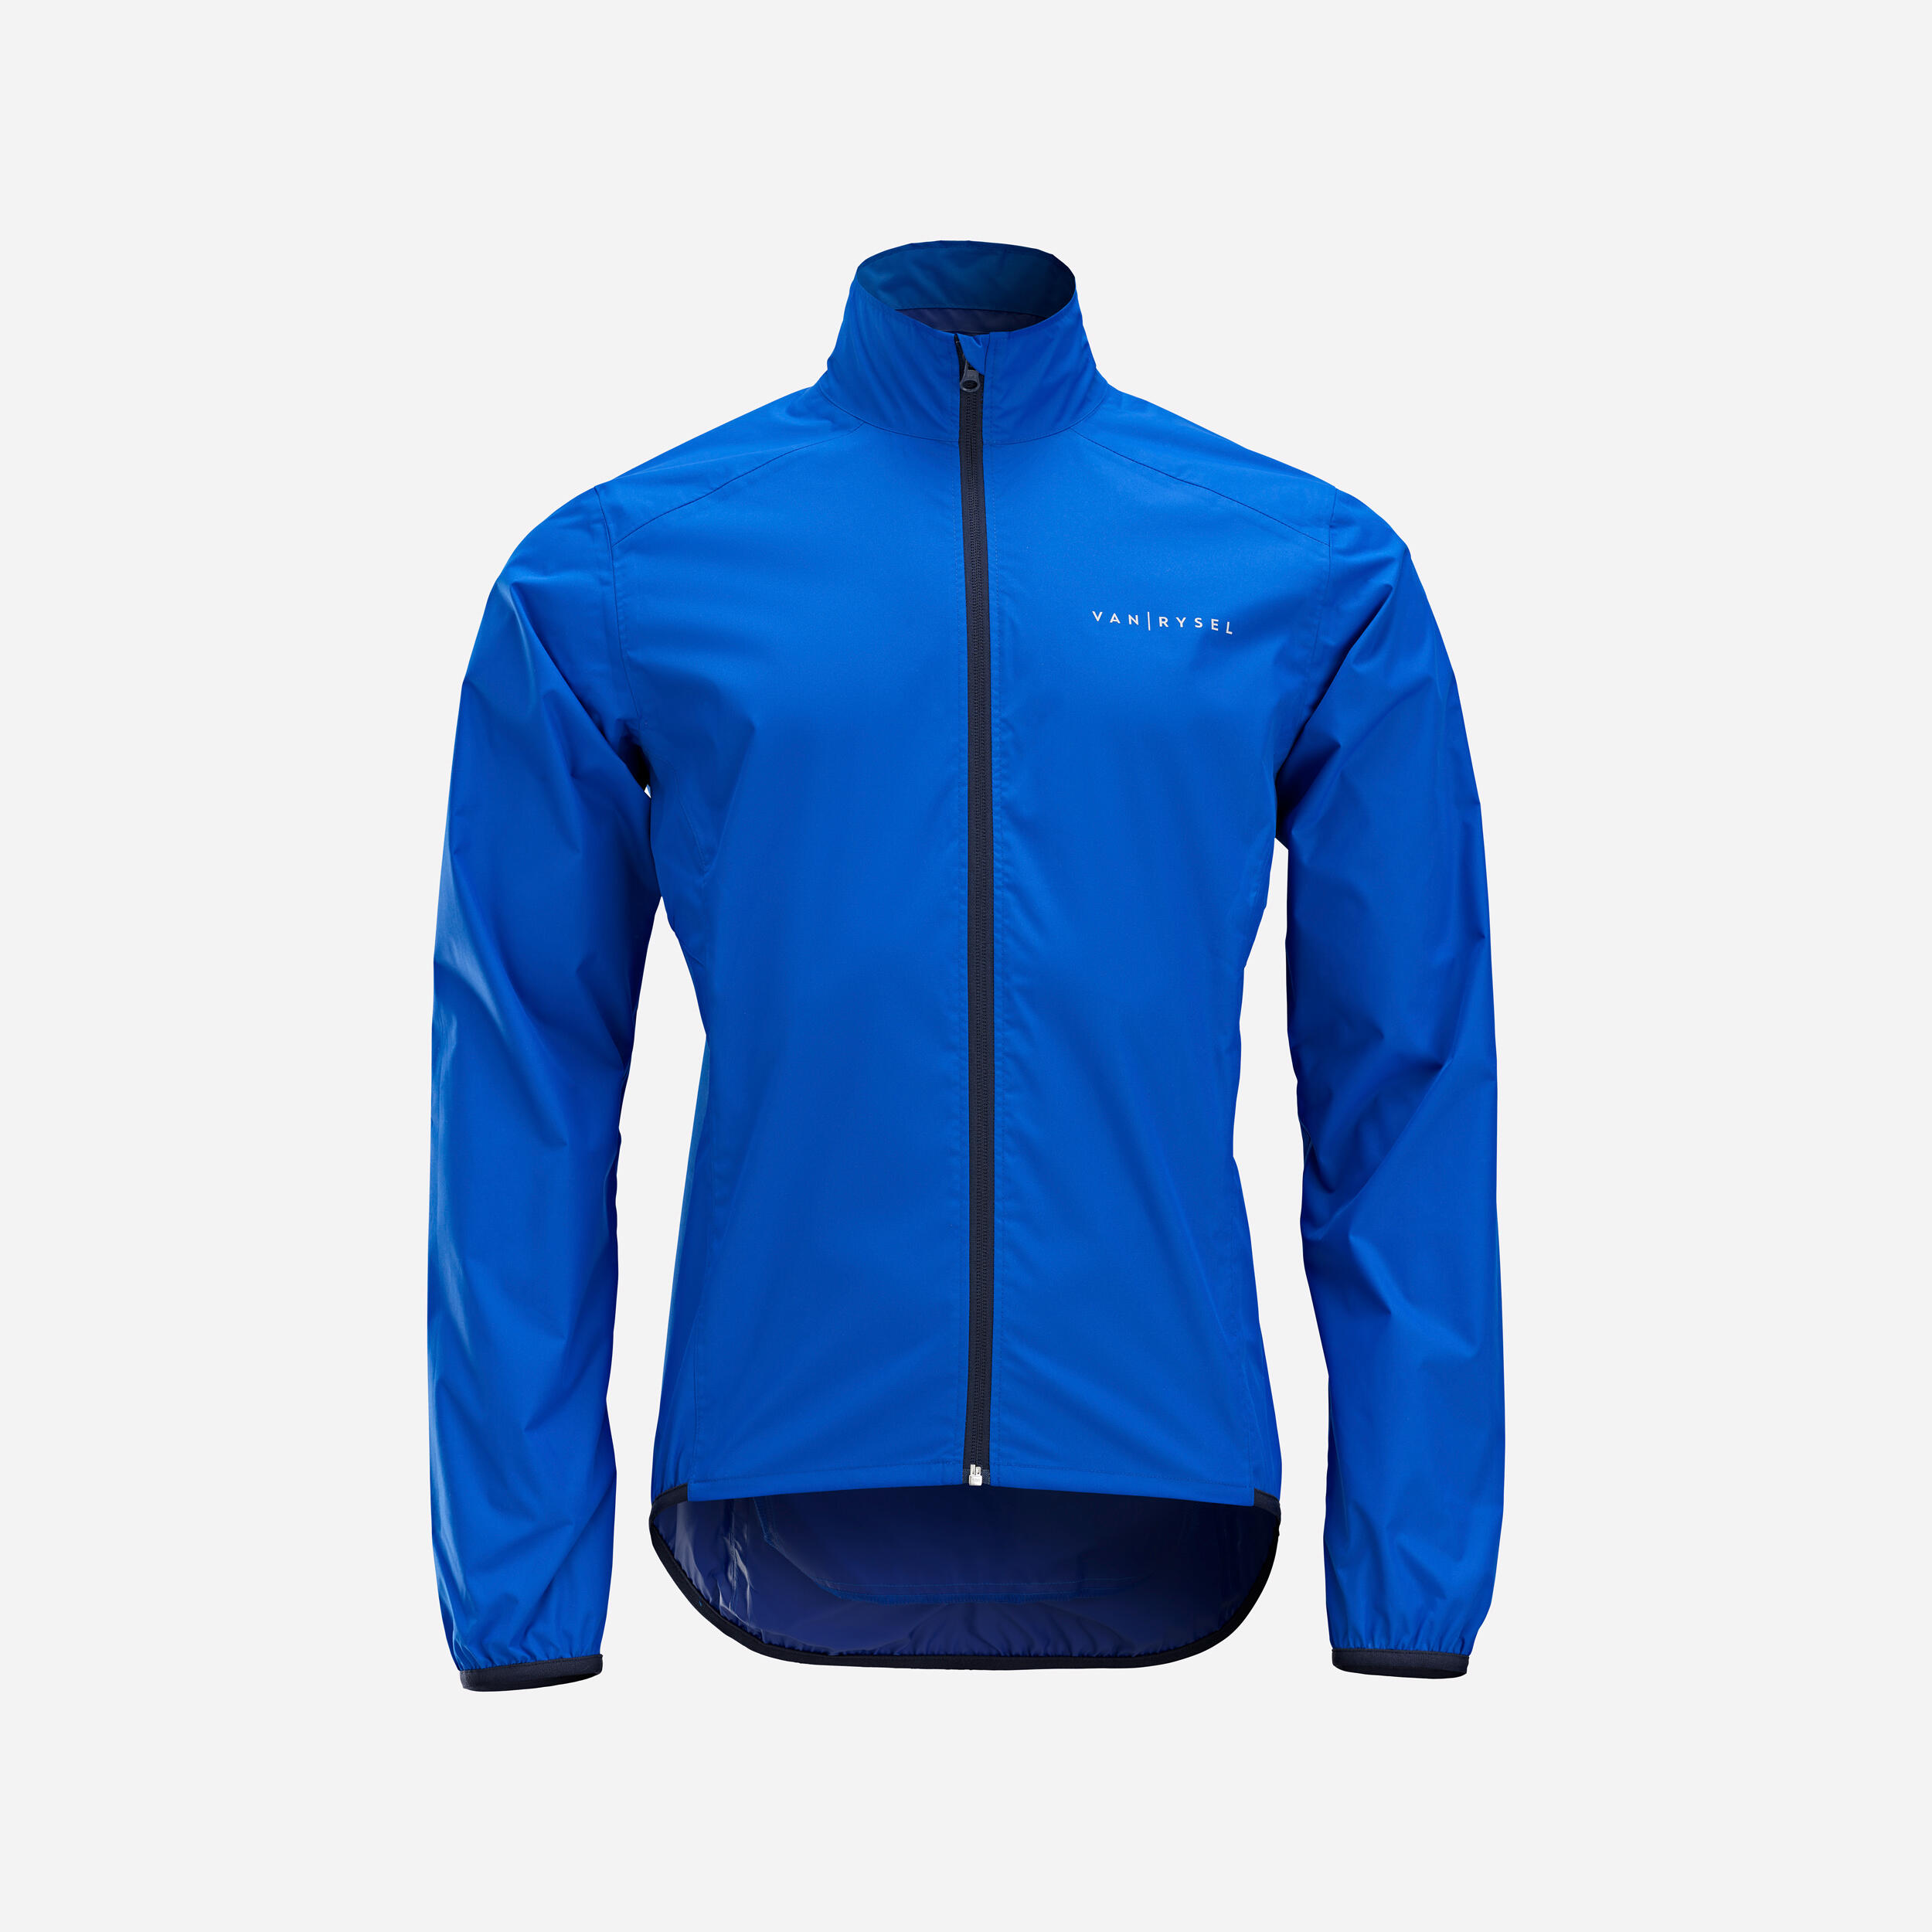 TRIBAN Men's Long-Sleeved Road Cycling Rain Jacket RC100 - Indigo Blue